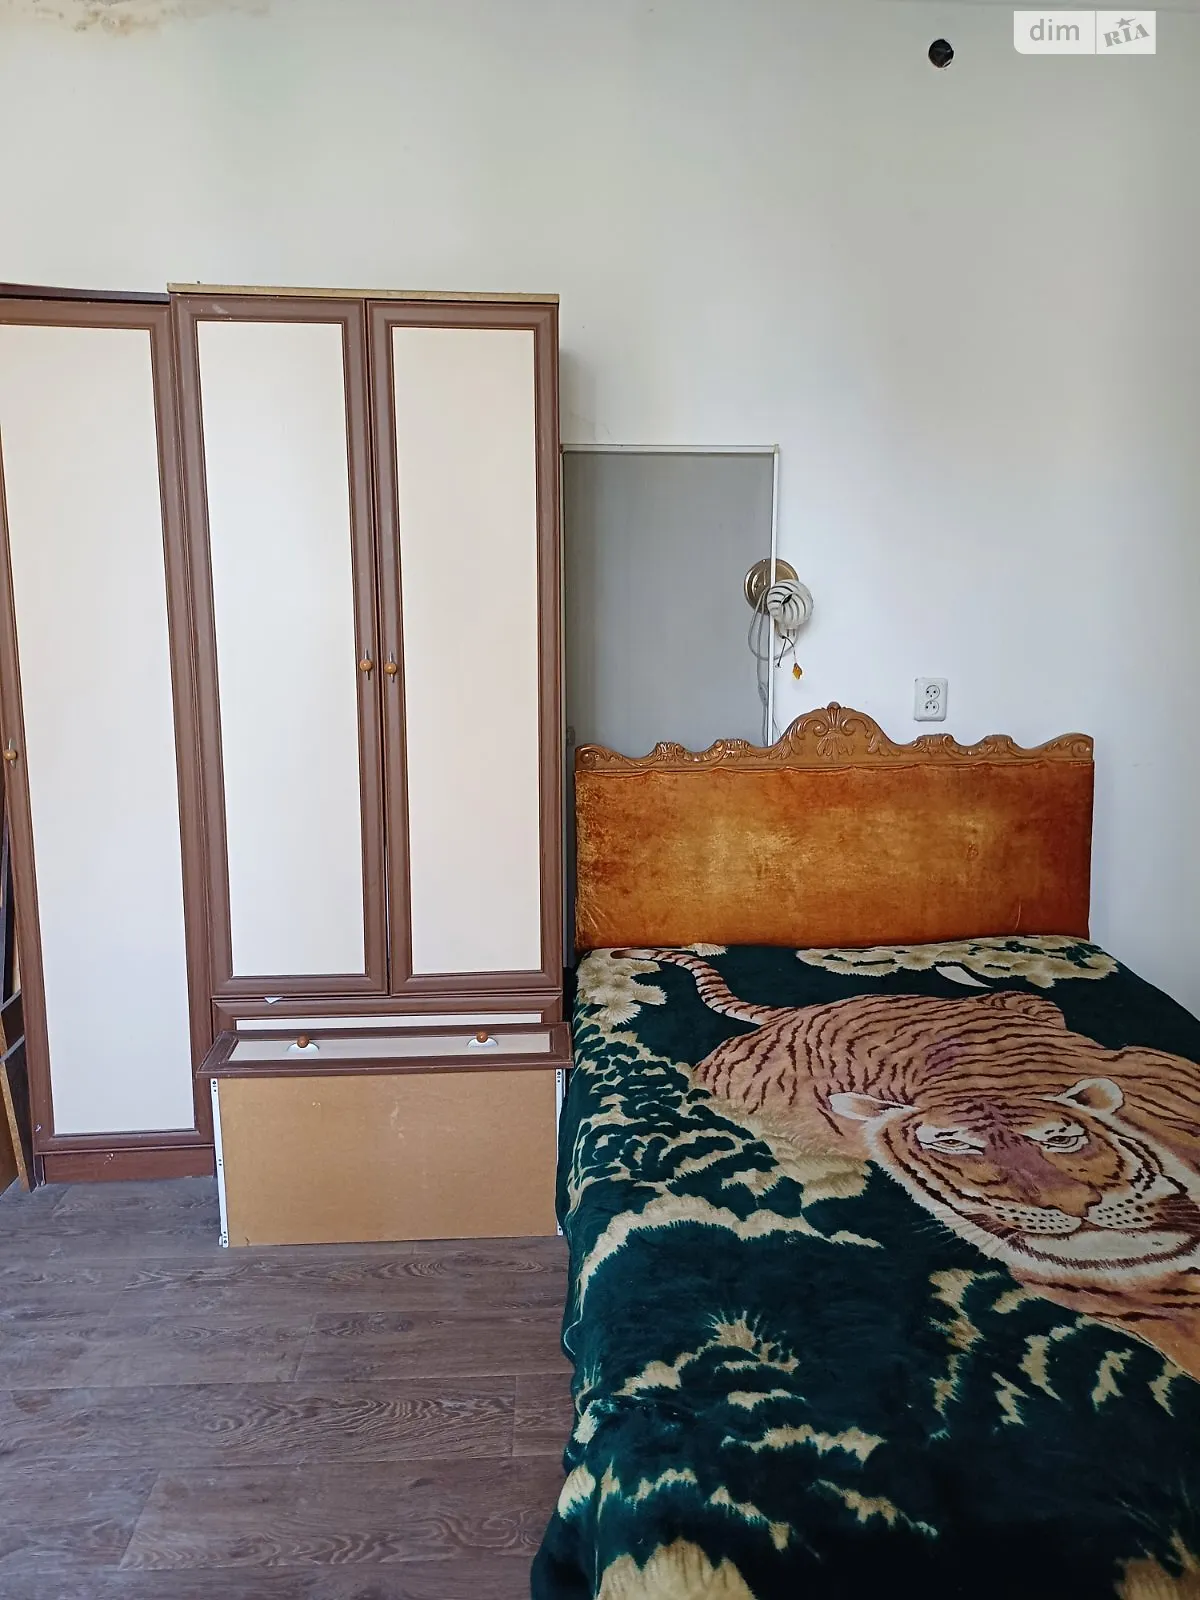 Продается комната 24 кв. м в Одессе, цена: 8500 $ - фото 1